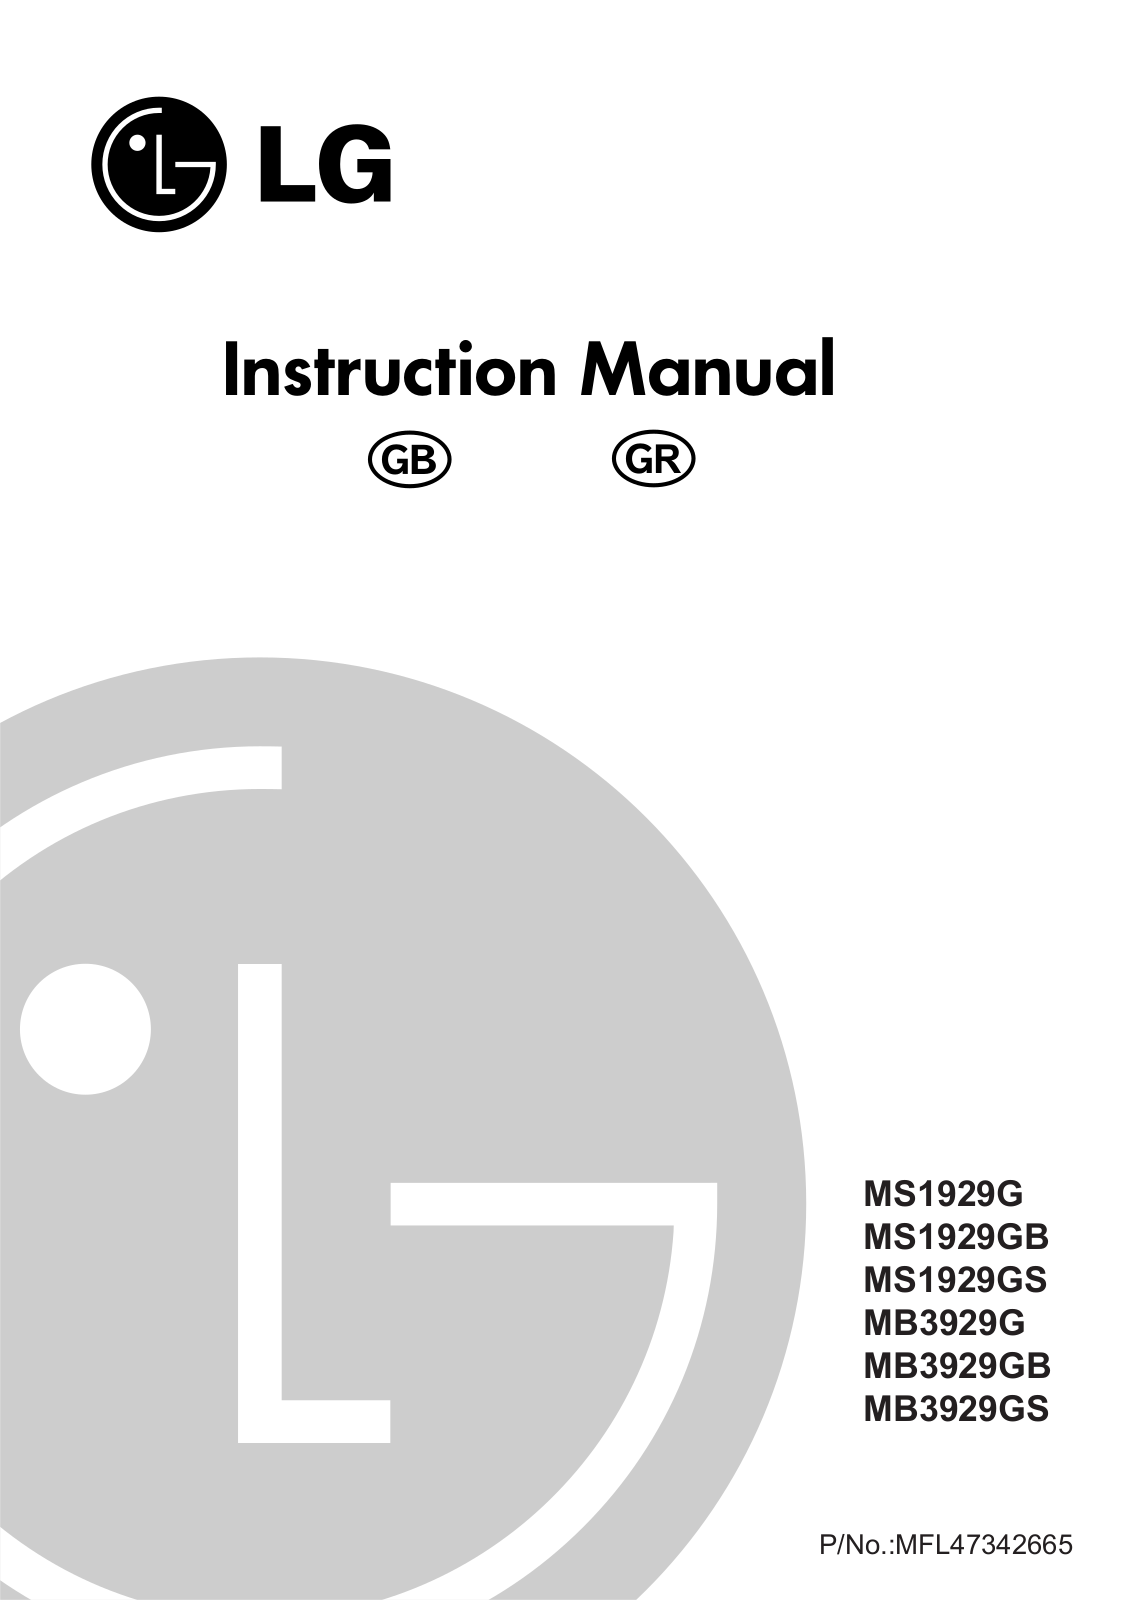 Lg MS1929G, MS1929GB, MS1929GS, MB3929G, MB3929GB Instructions Manual